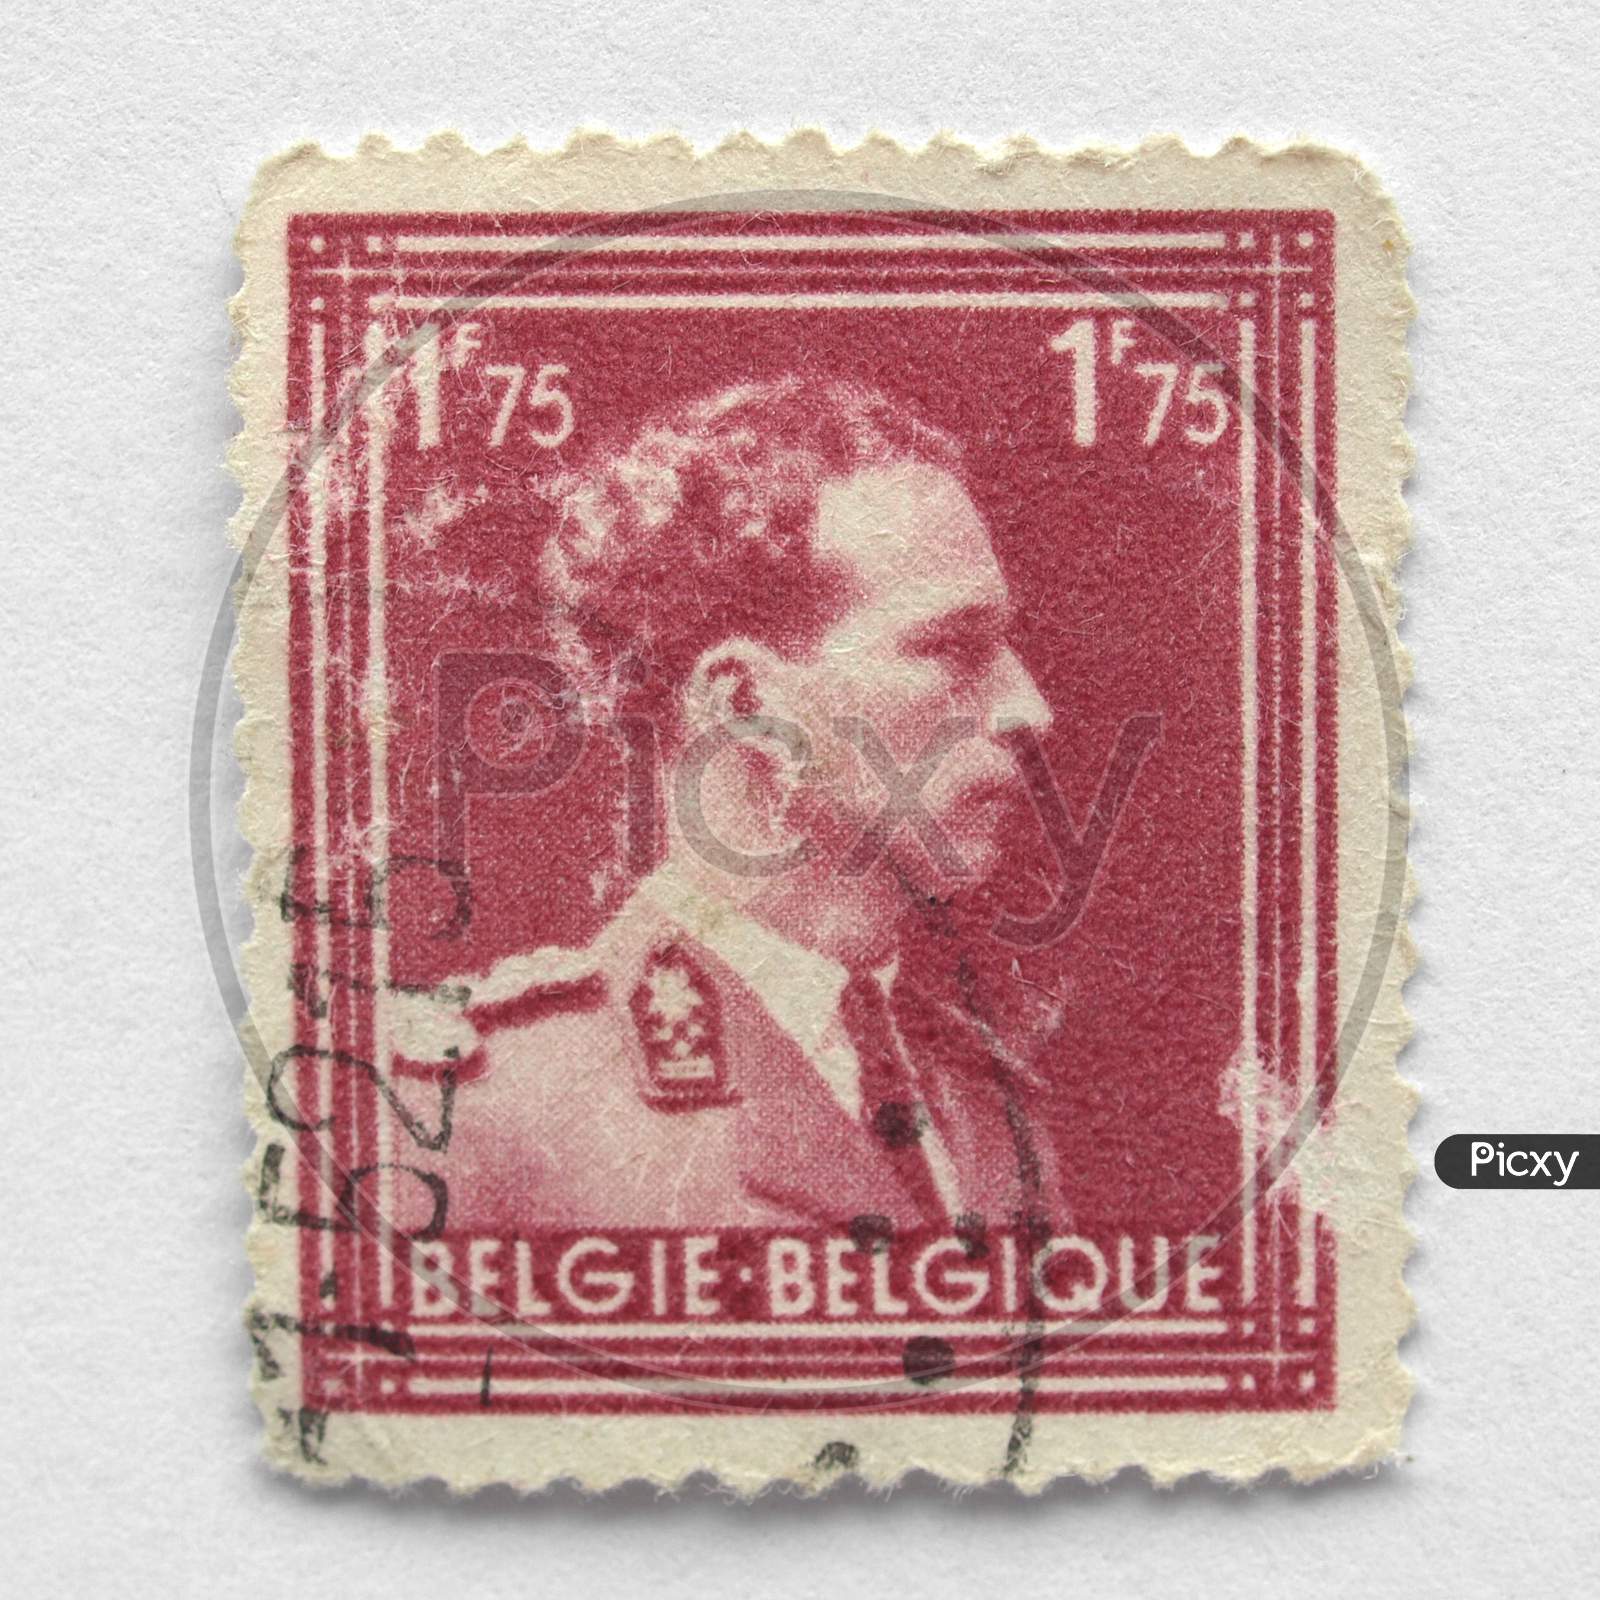 Belgian Postage Stamp From Belgium (European Union)